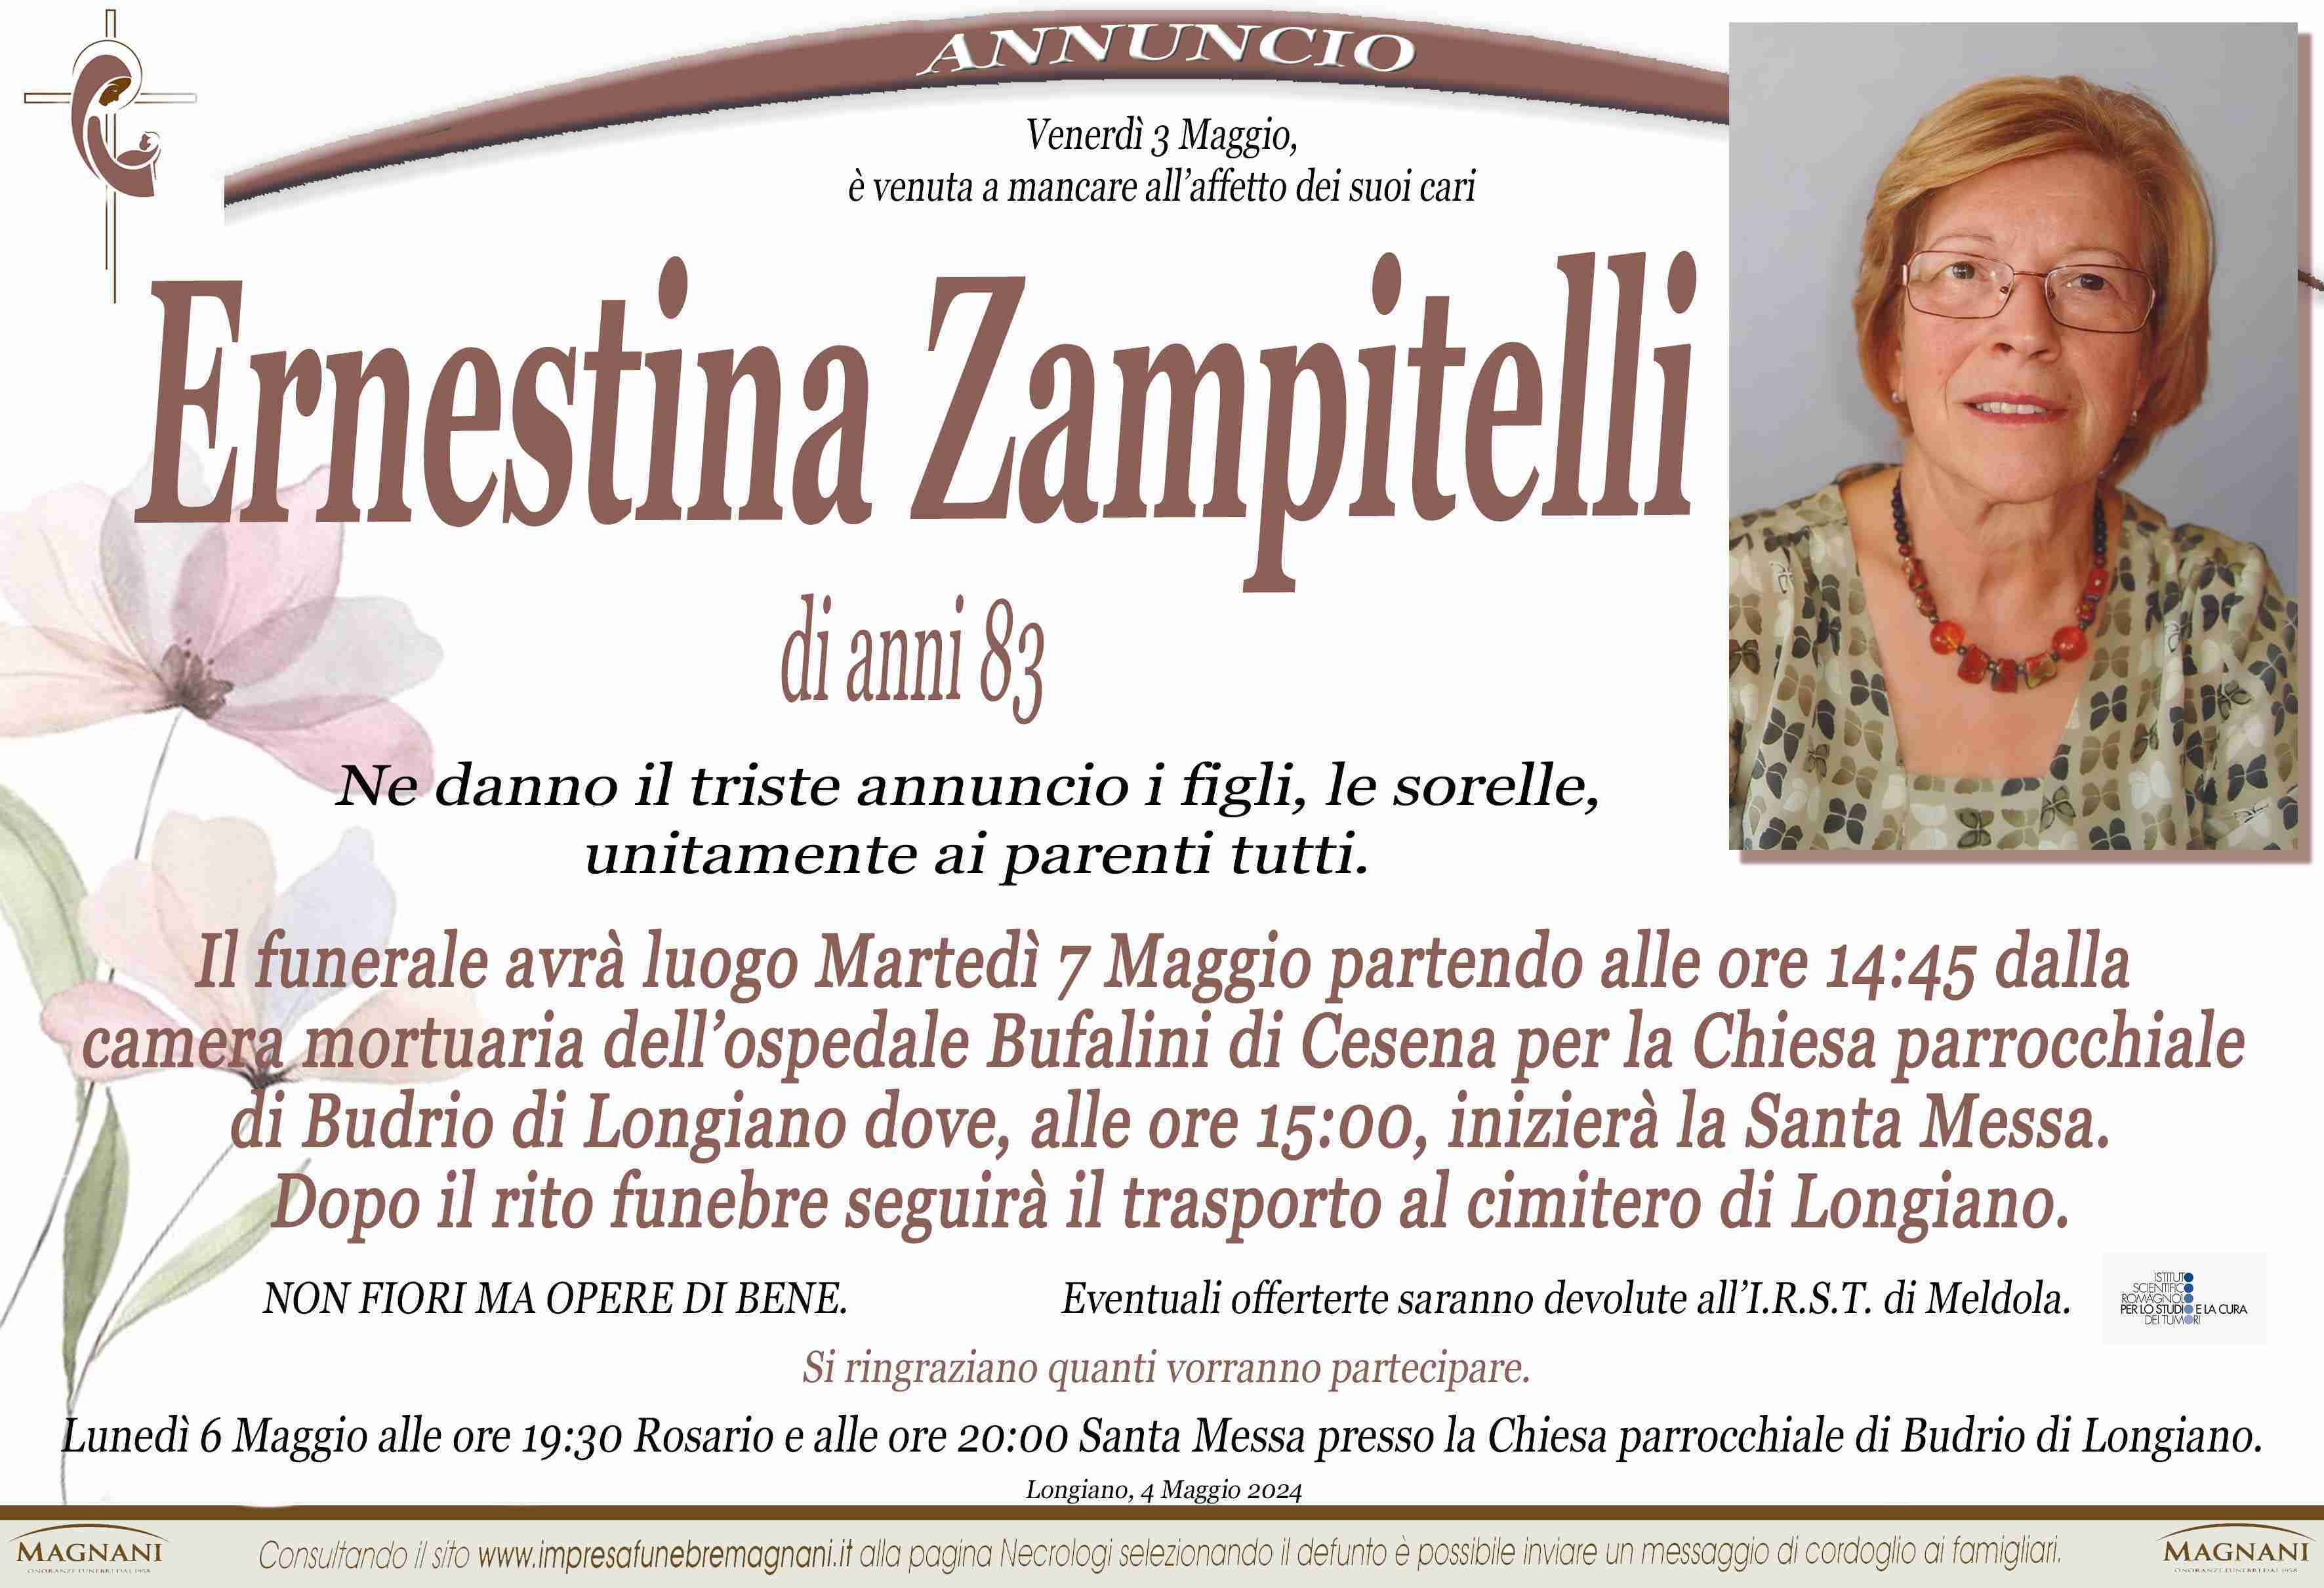 Ernesta Zampitelli